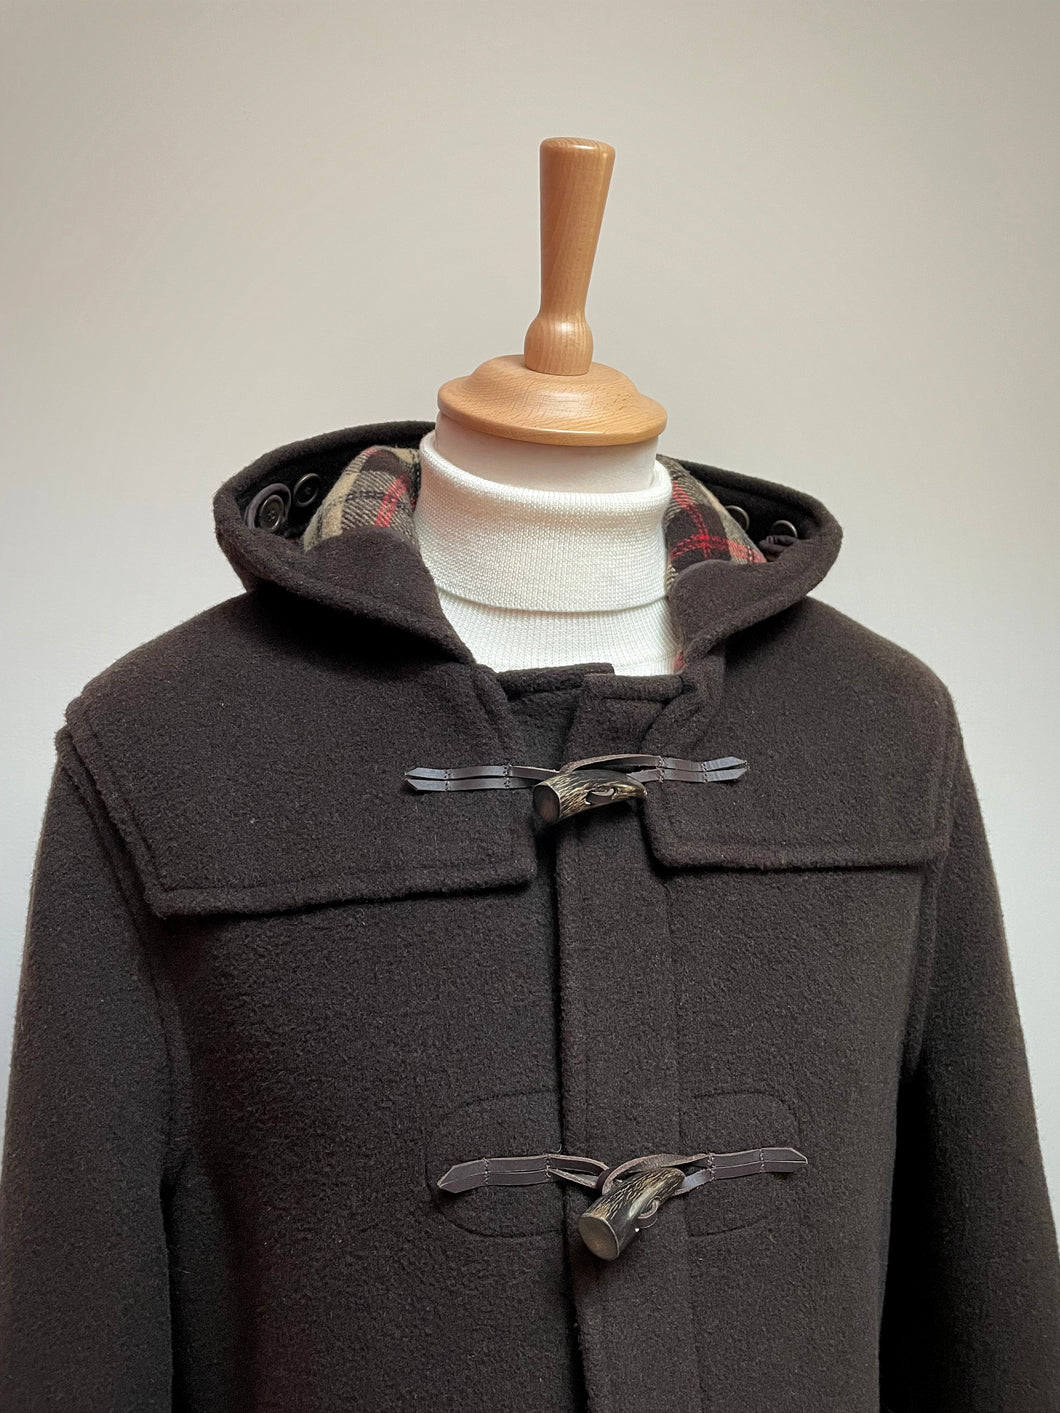 Gloverall manteau duffle-coat marron en laine Made in England 48